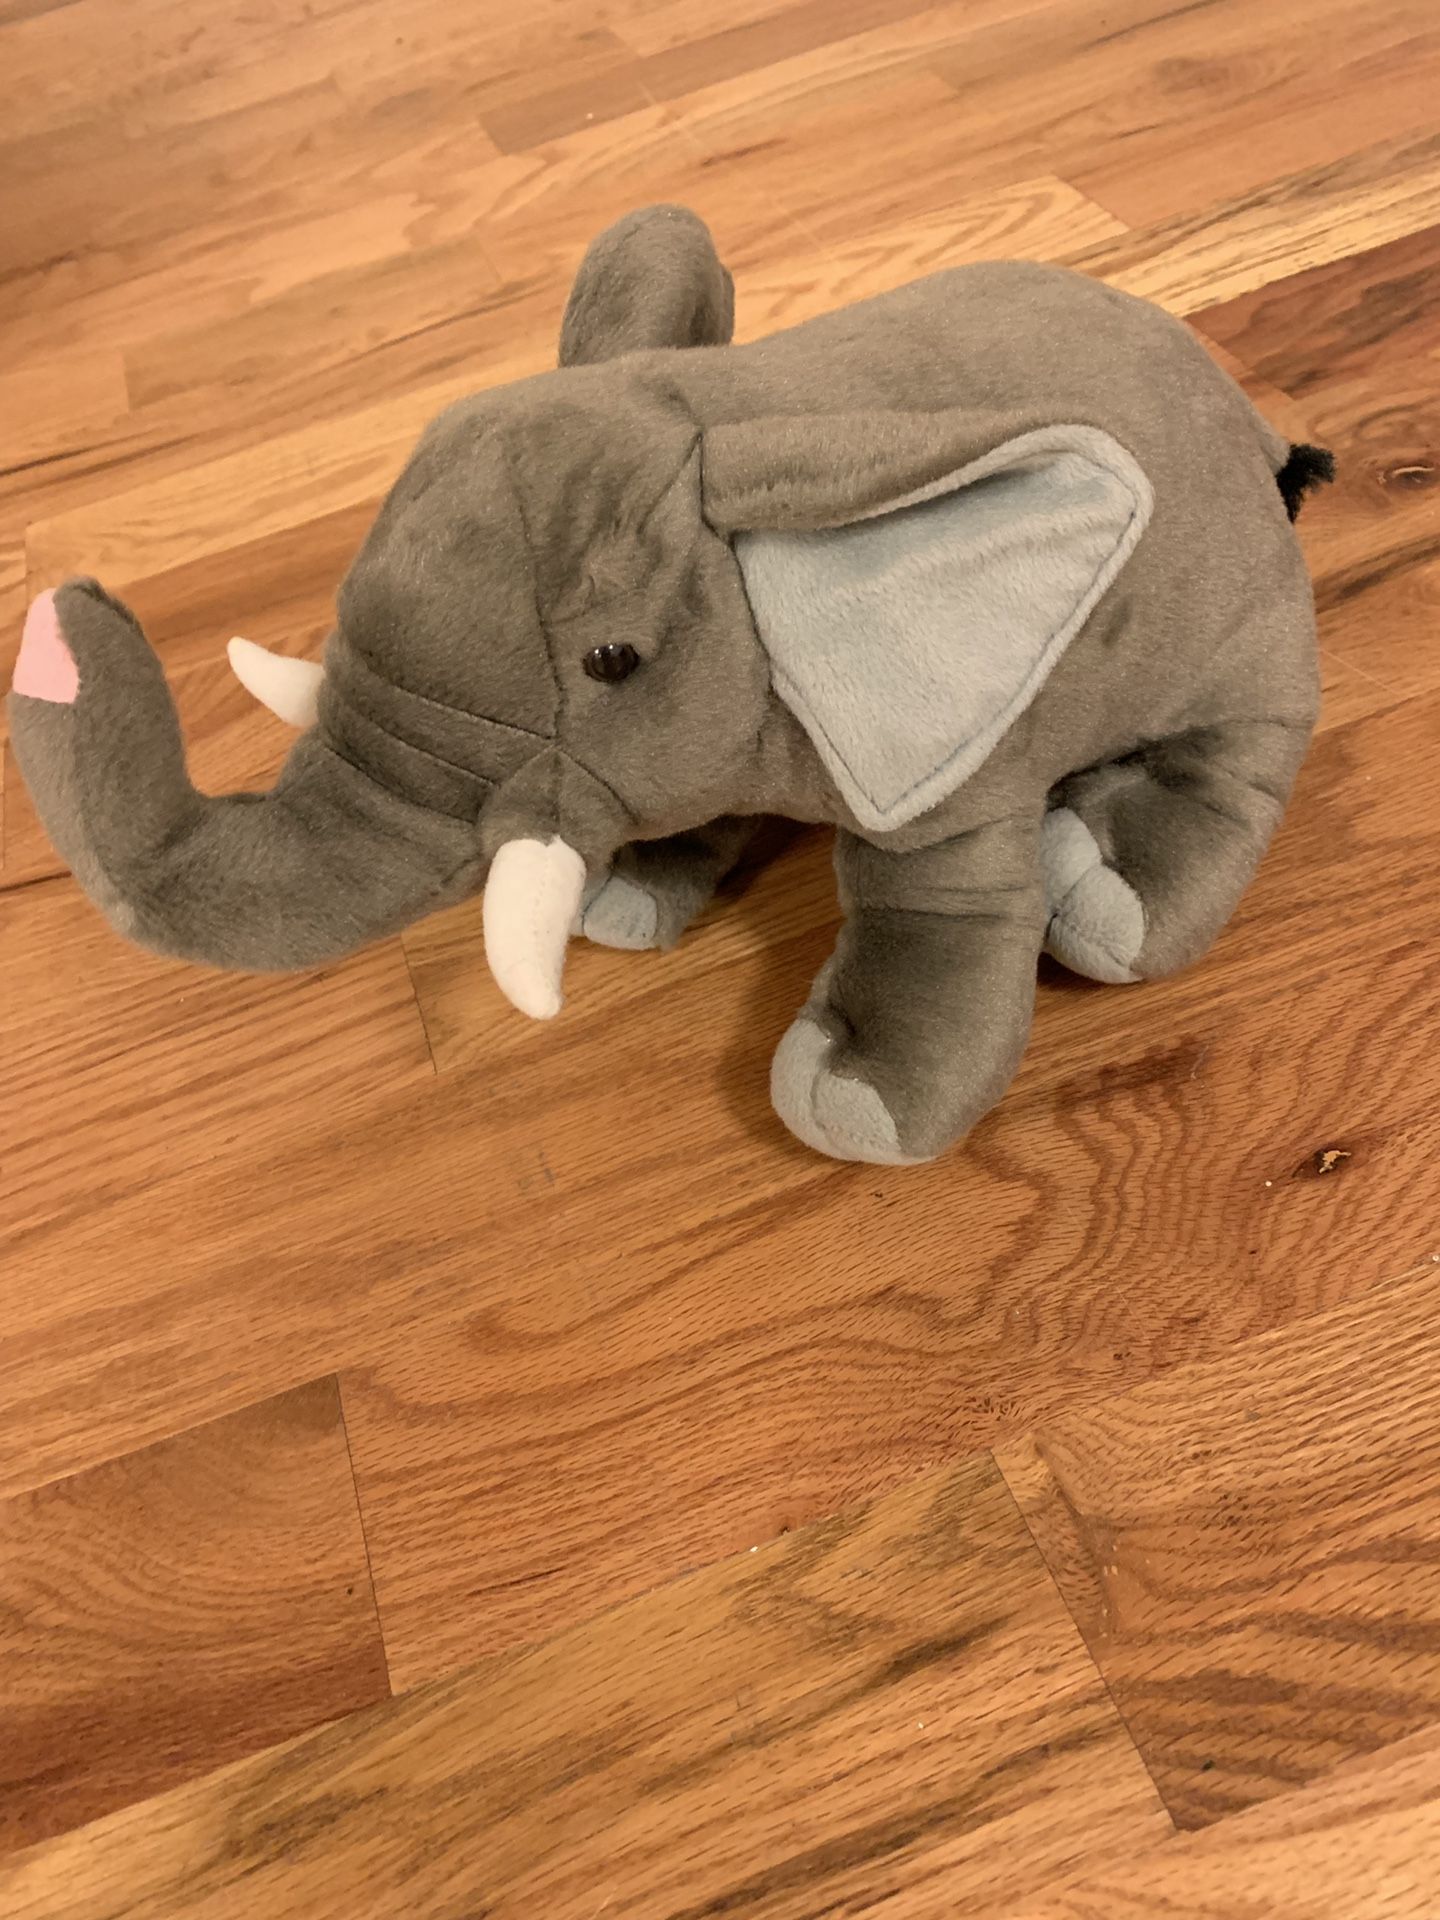 Soft elephant stuffed animal